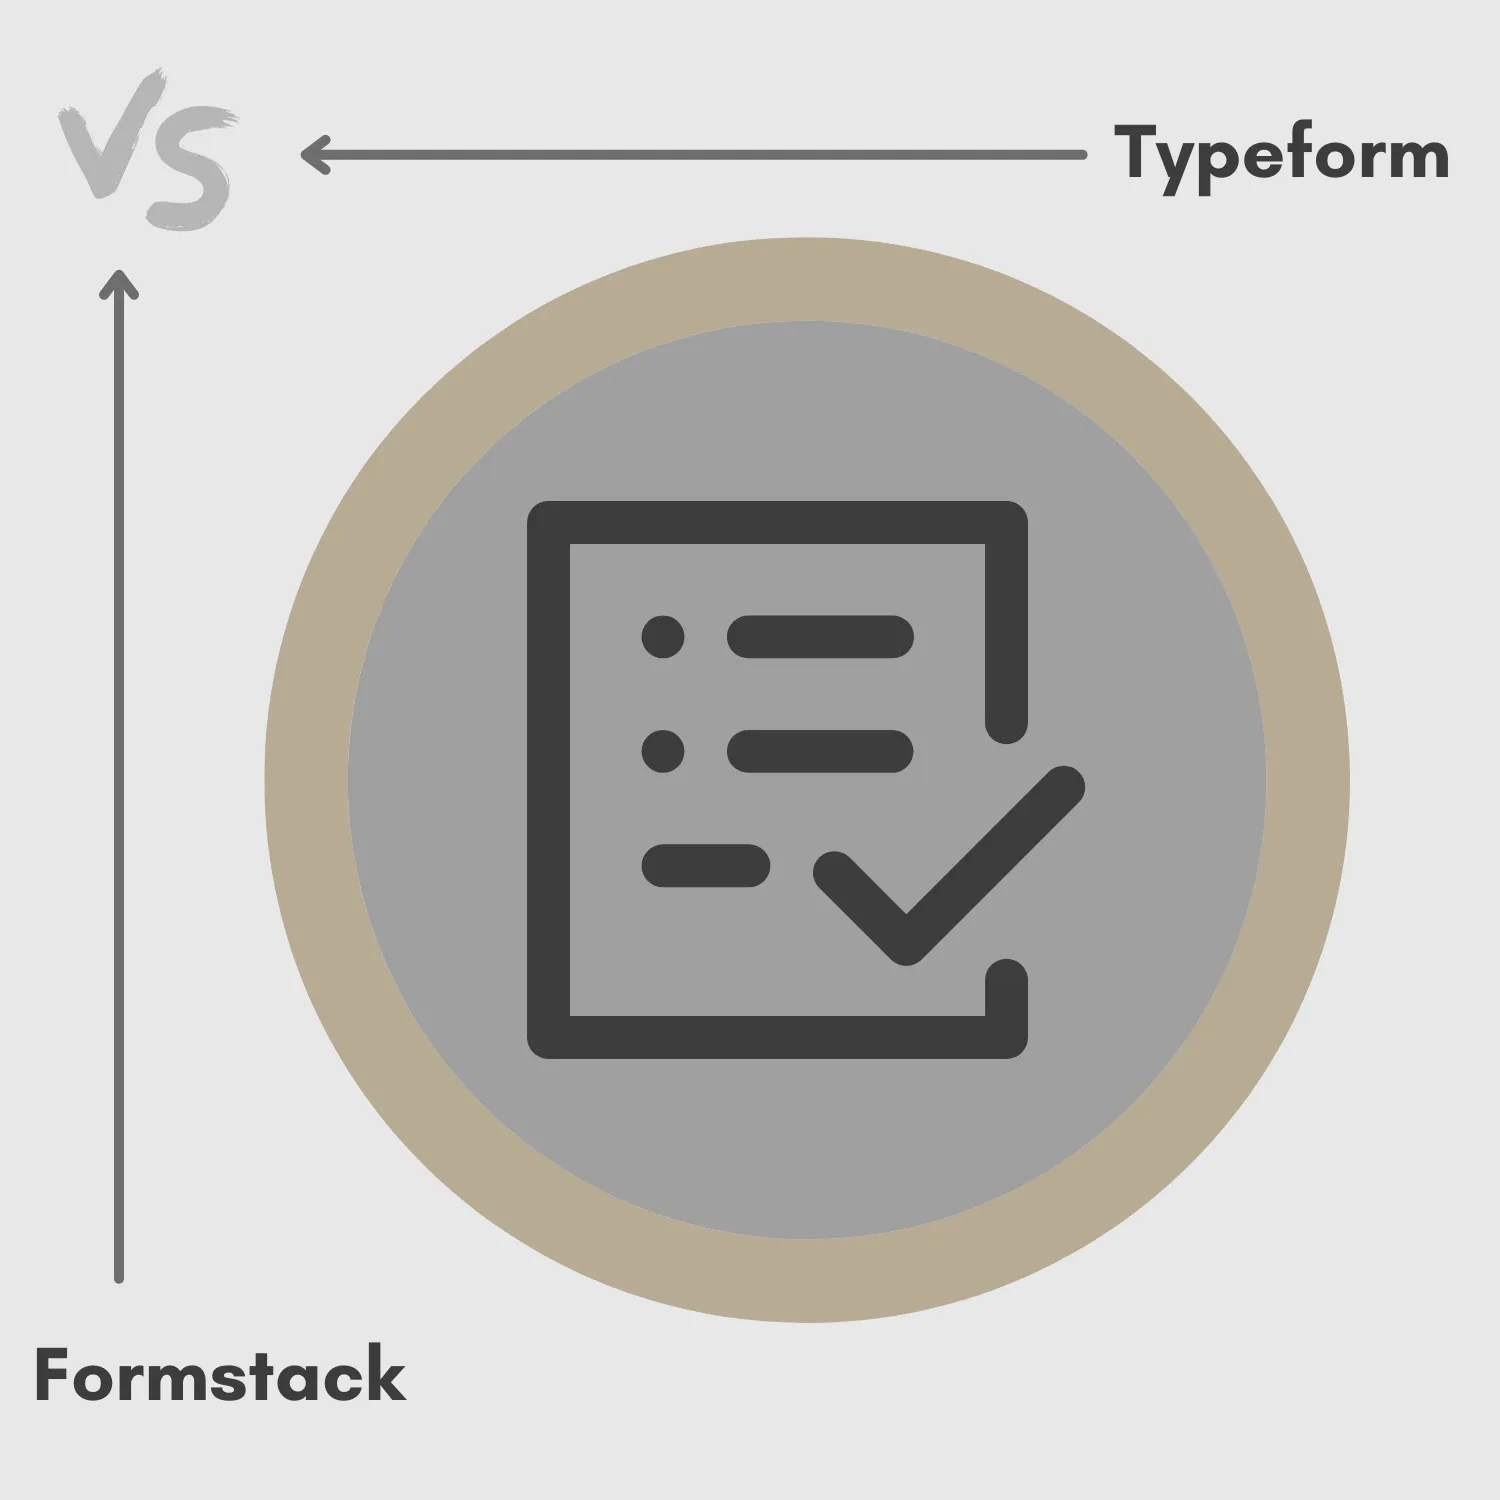 Typeform vs Formstack